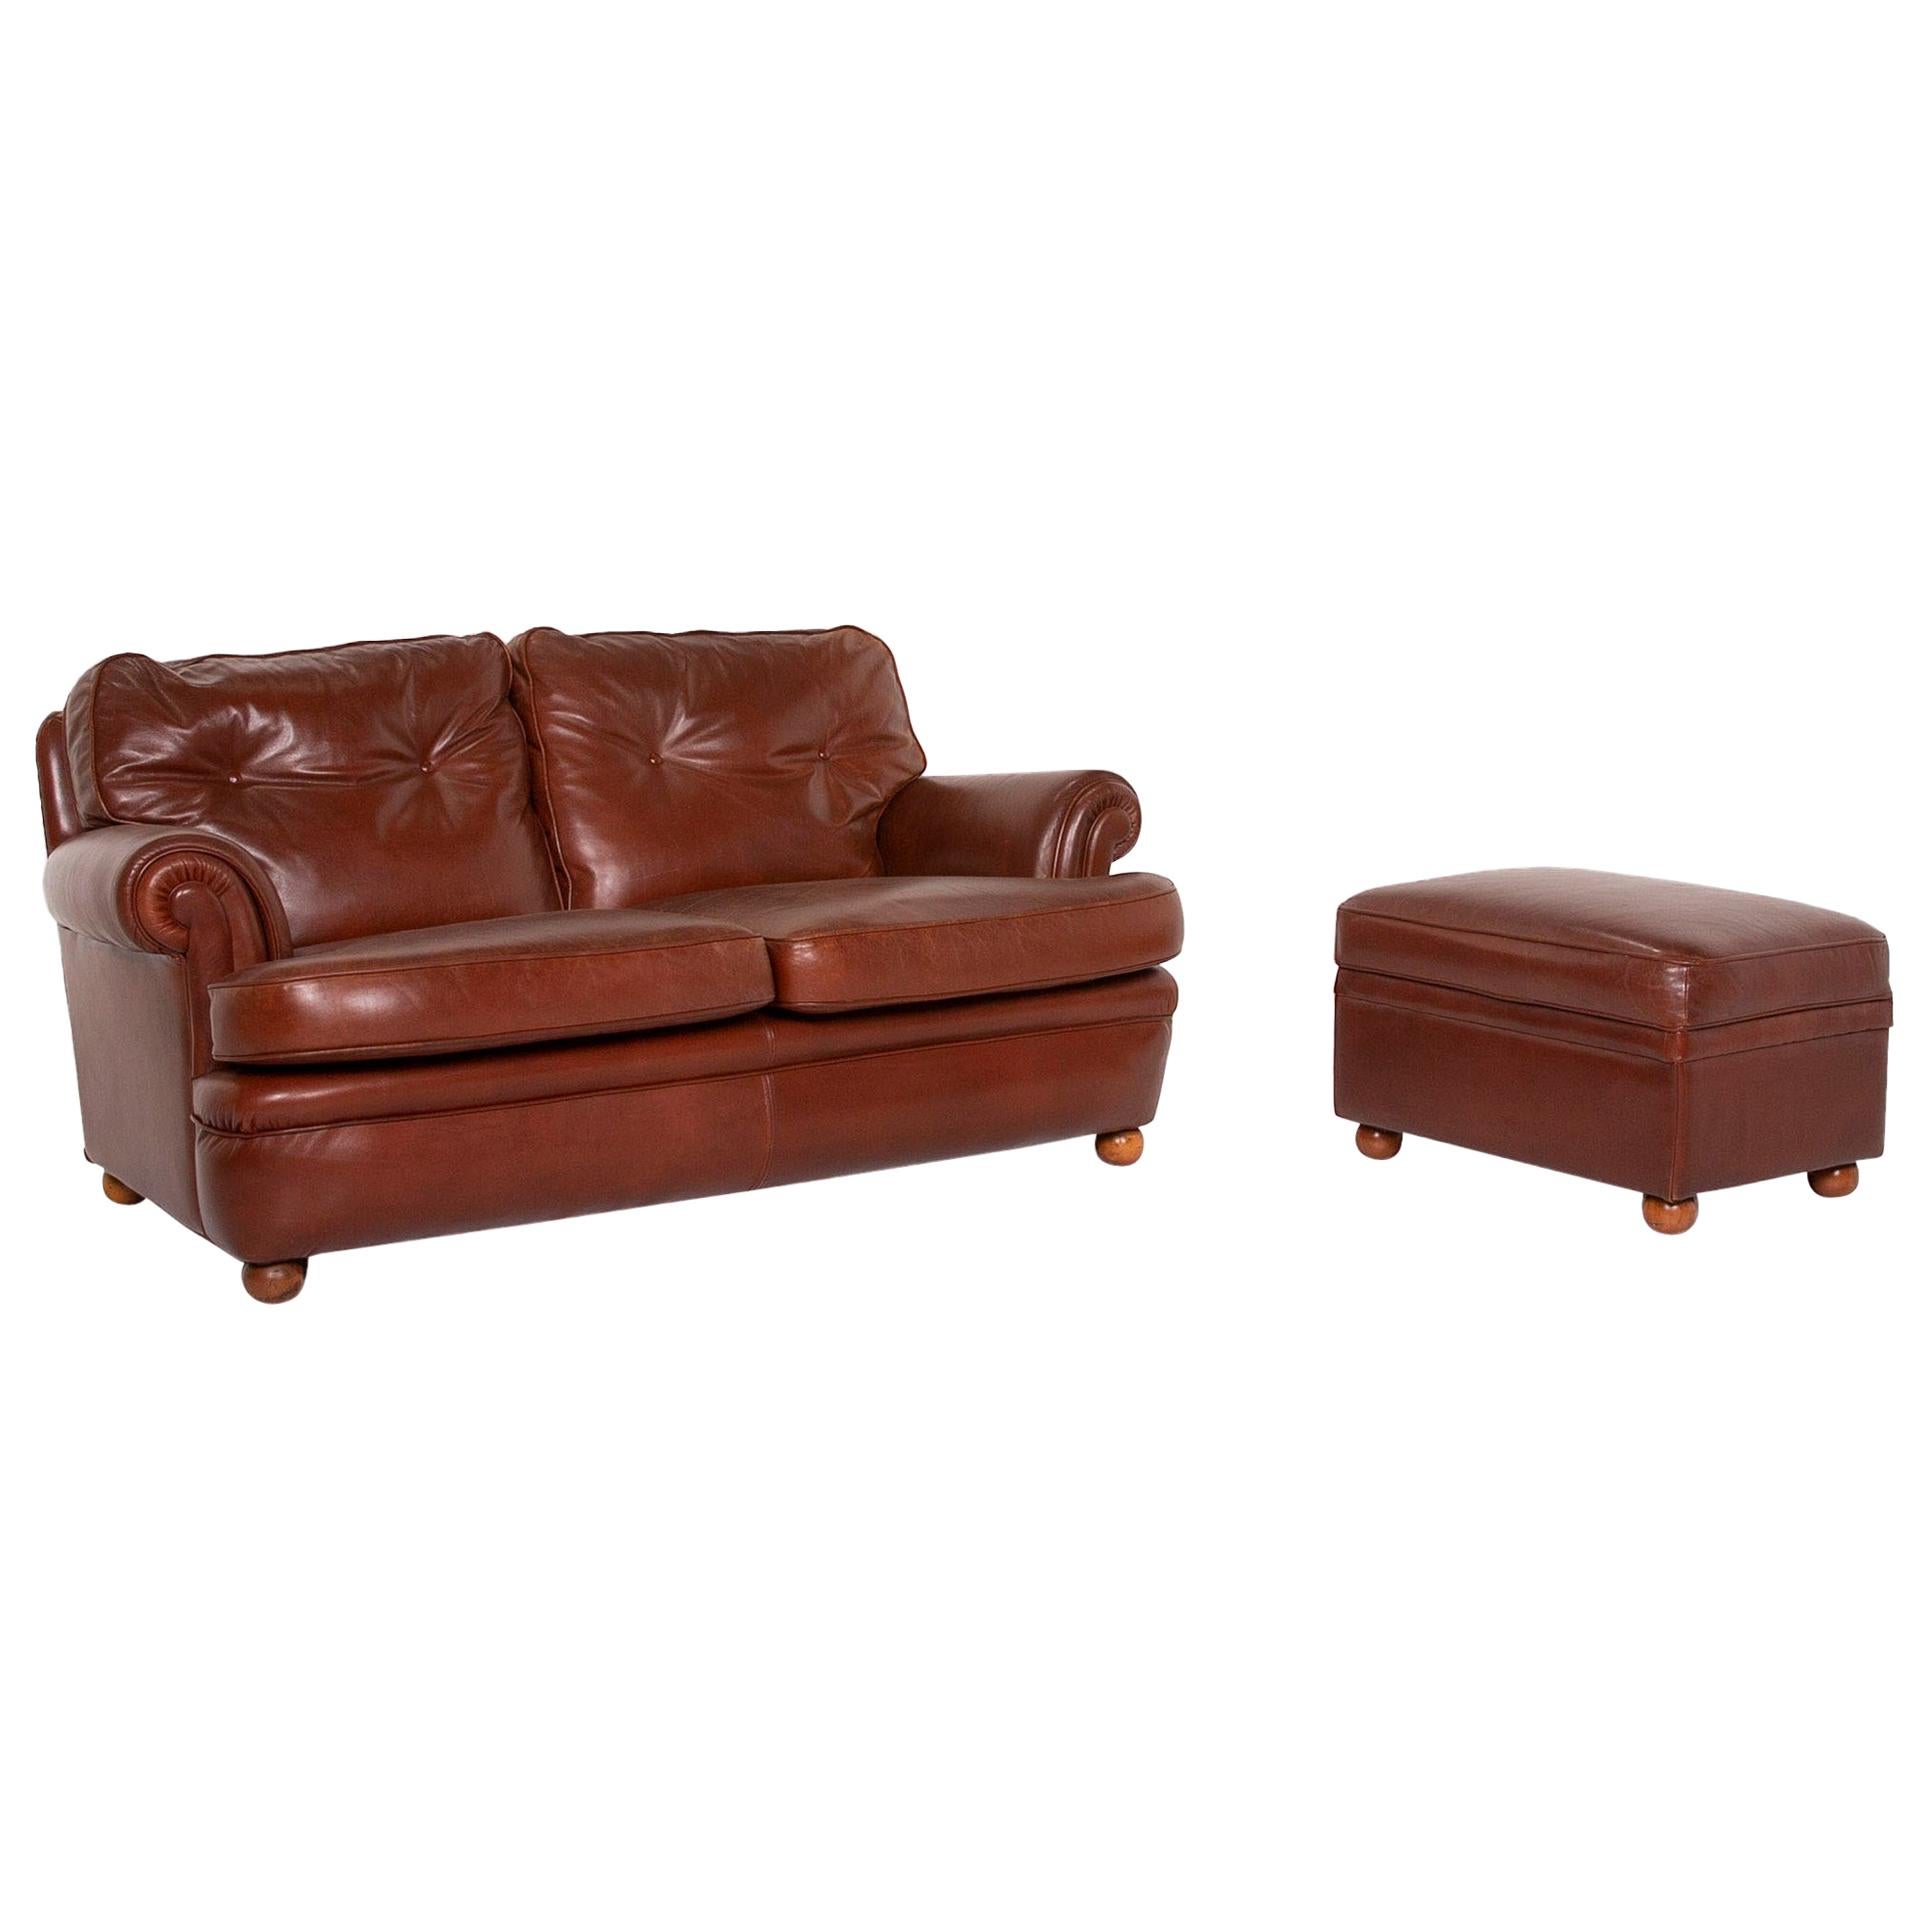 Poltrona Frau Leather Sofa Set Cognac Two-Seat Stool For Sale